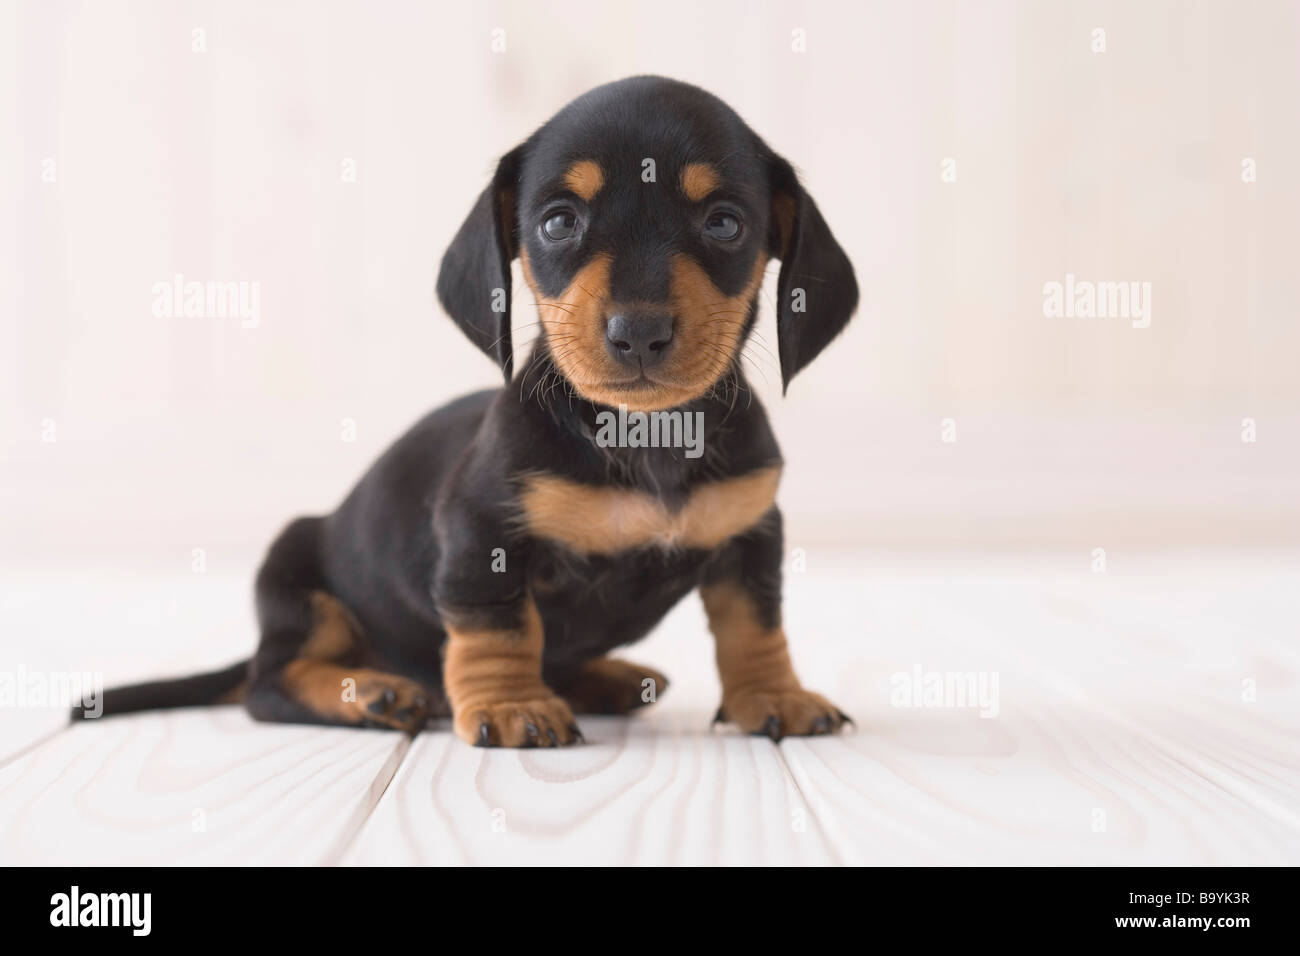 Miniature dachshund sitting Stock Photo